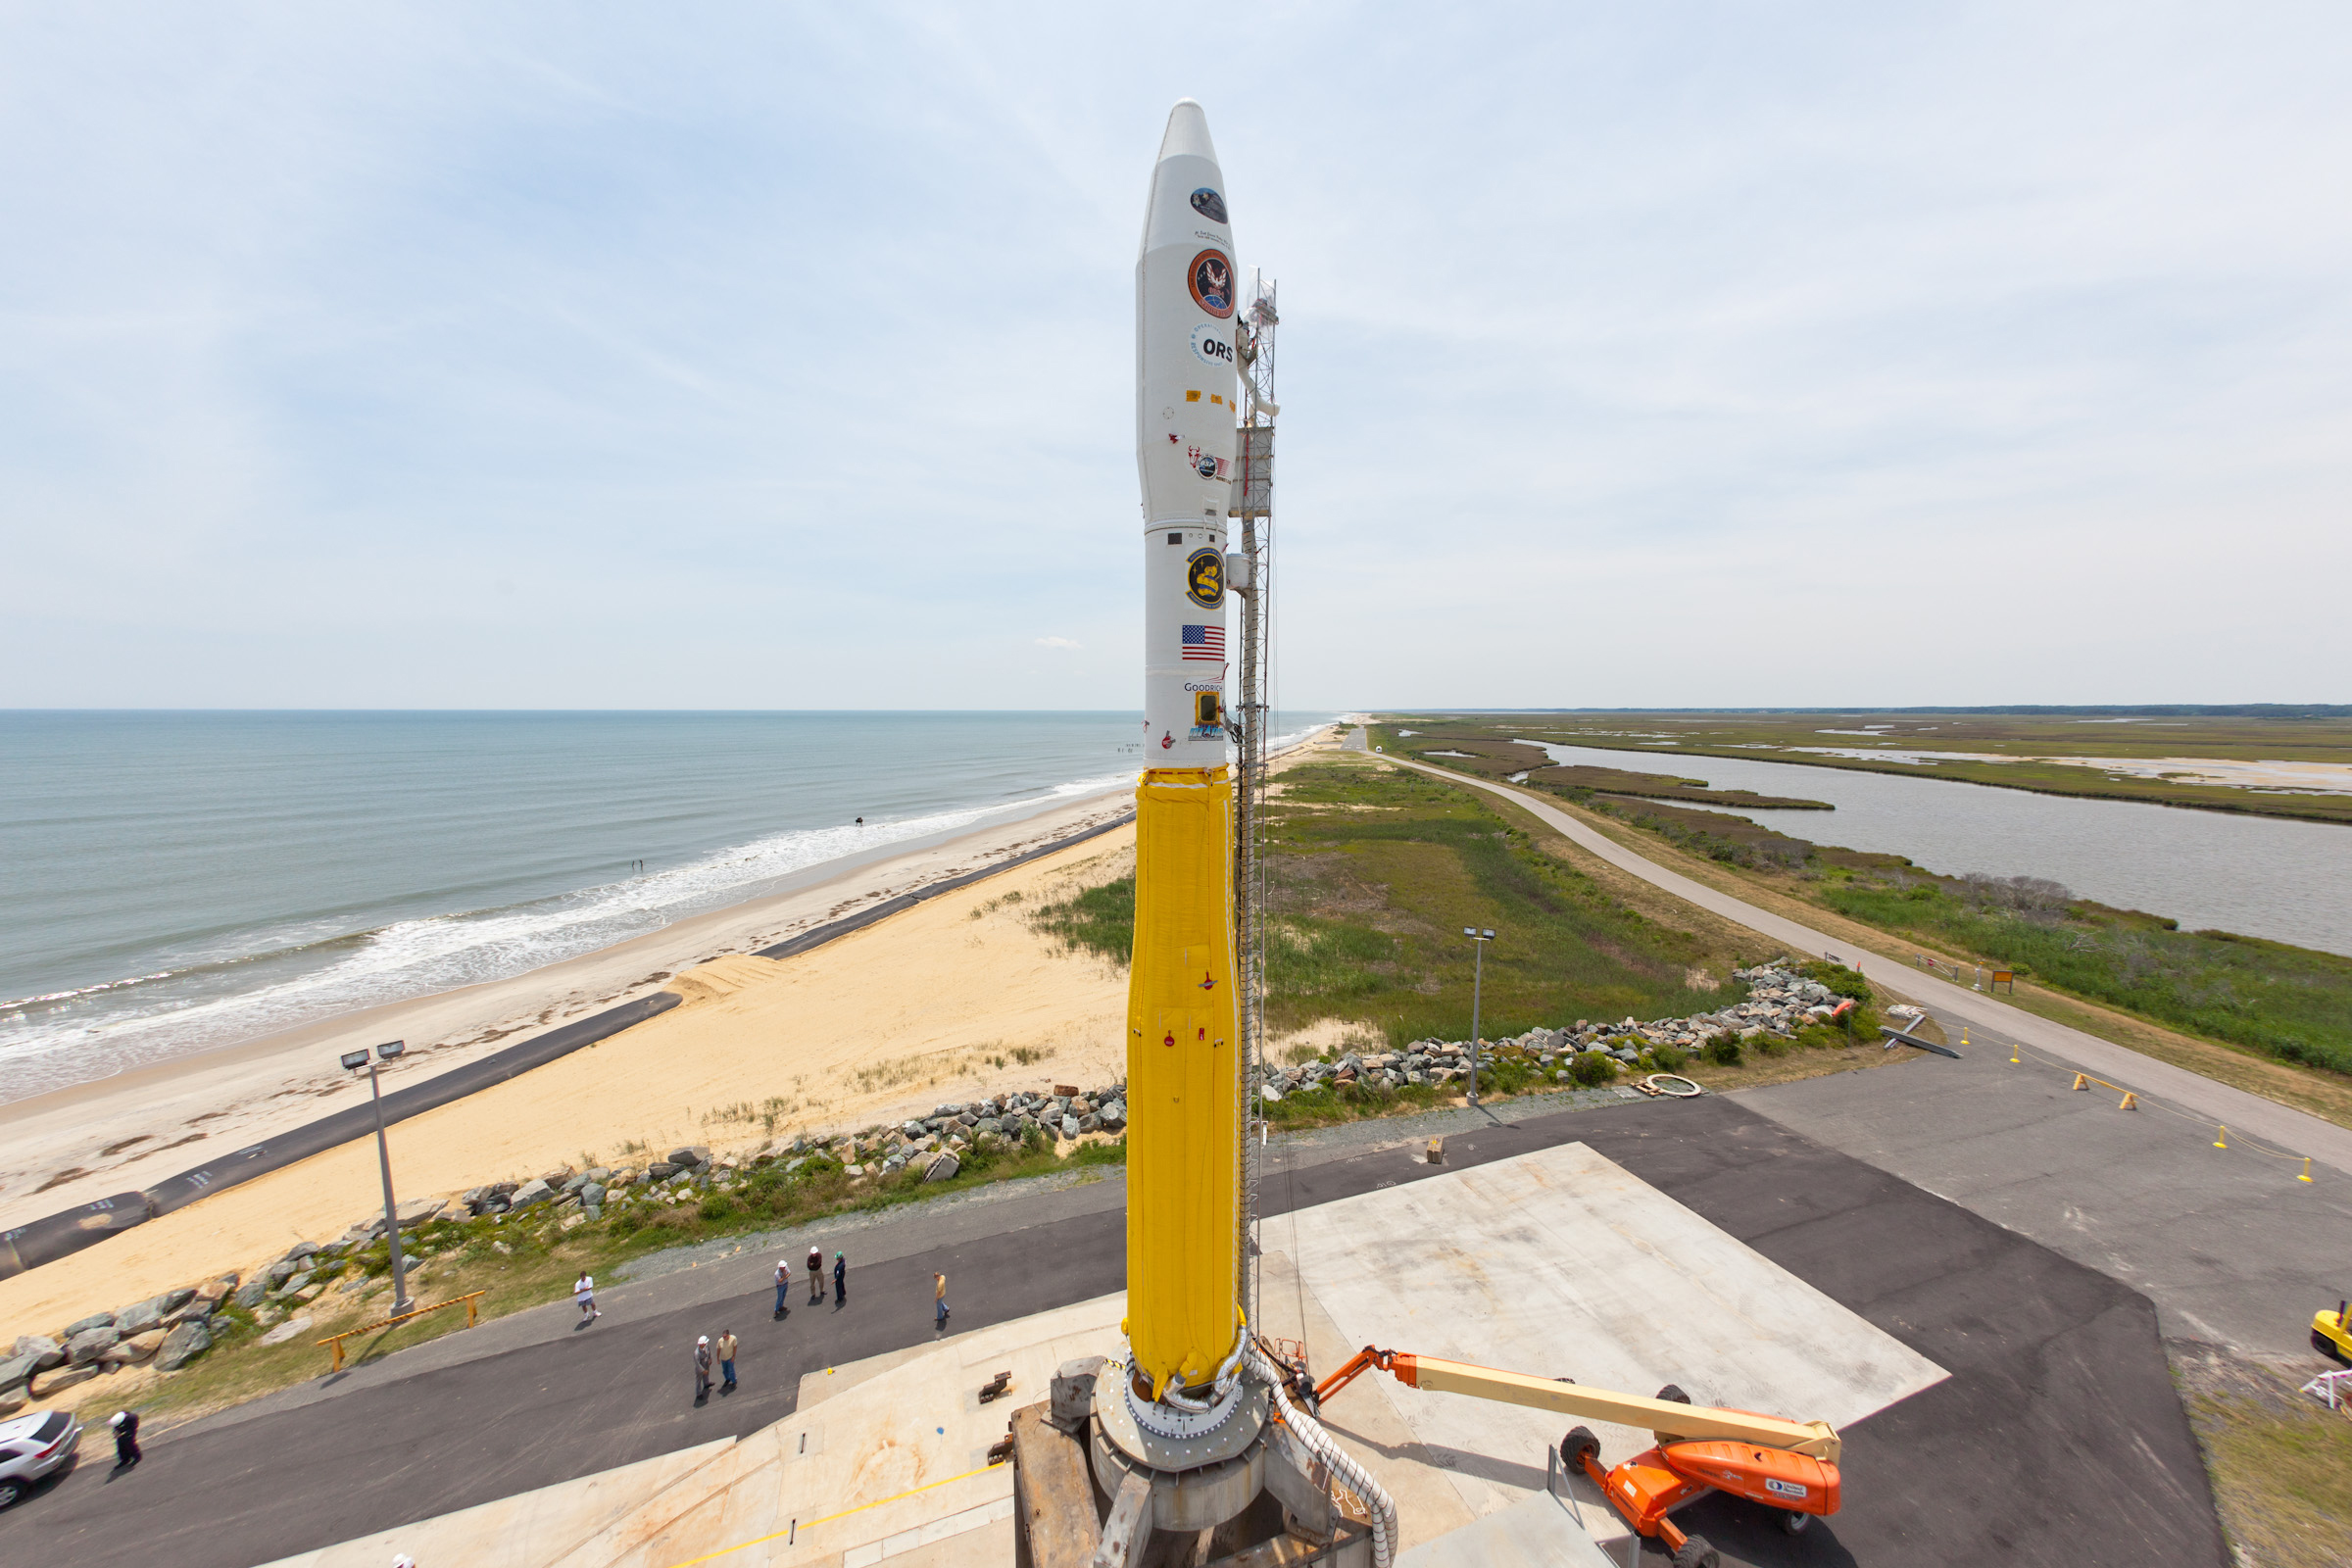 How to Watch Rocket Launch From NASA's Wallops Virginia Flight Facility